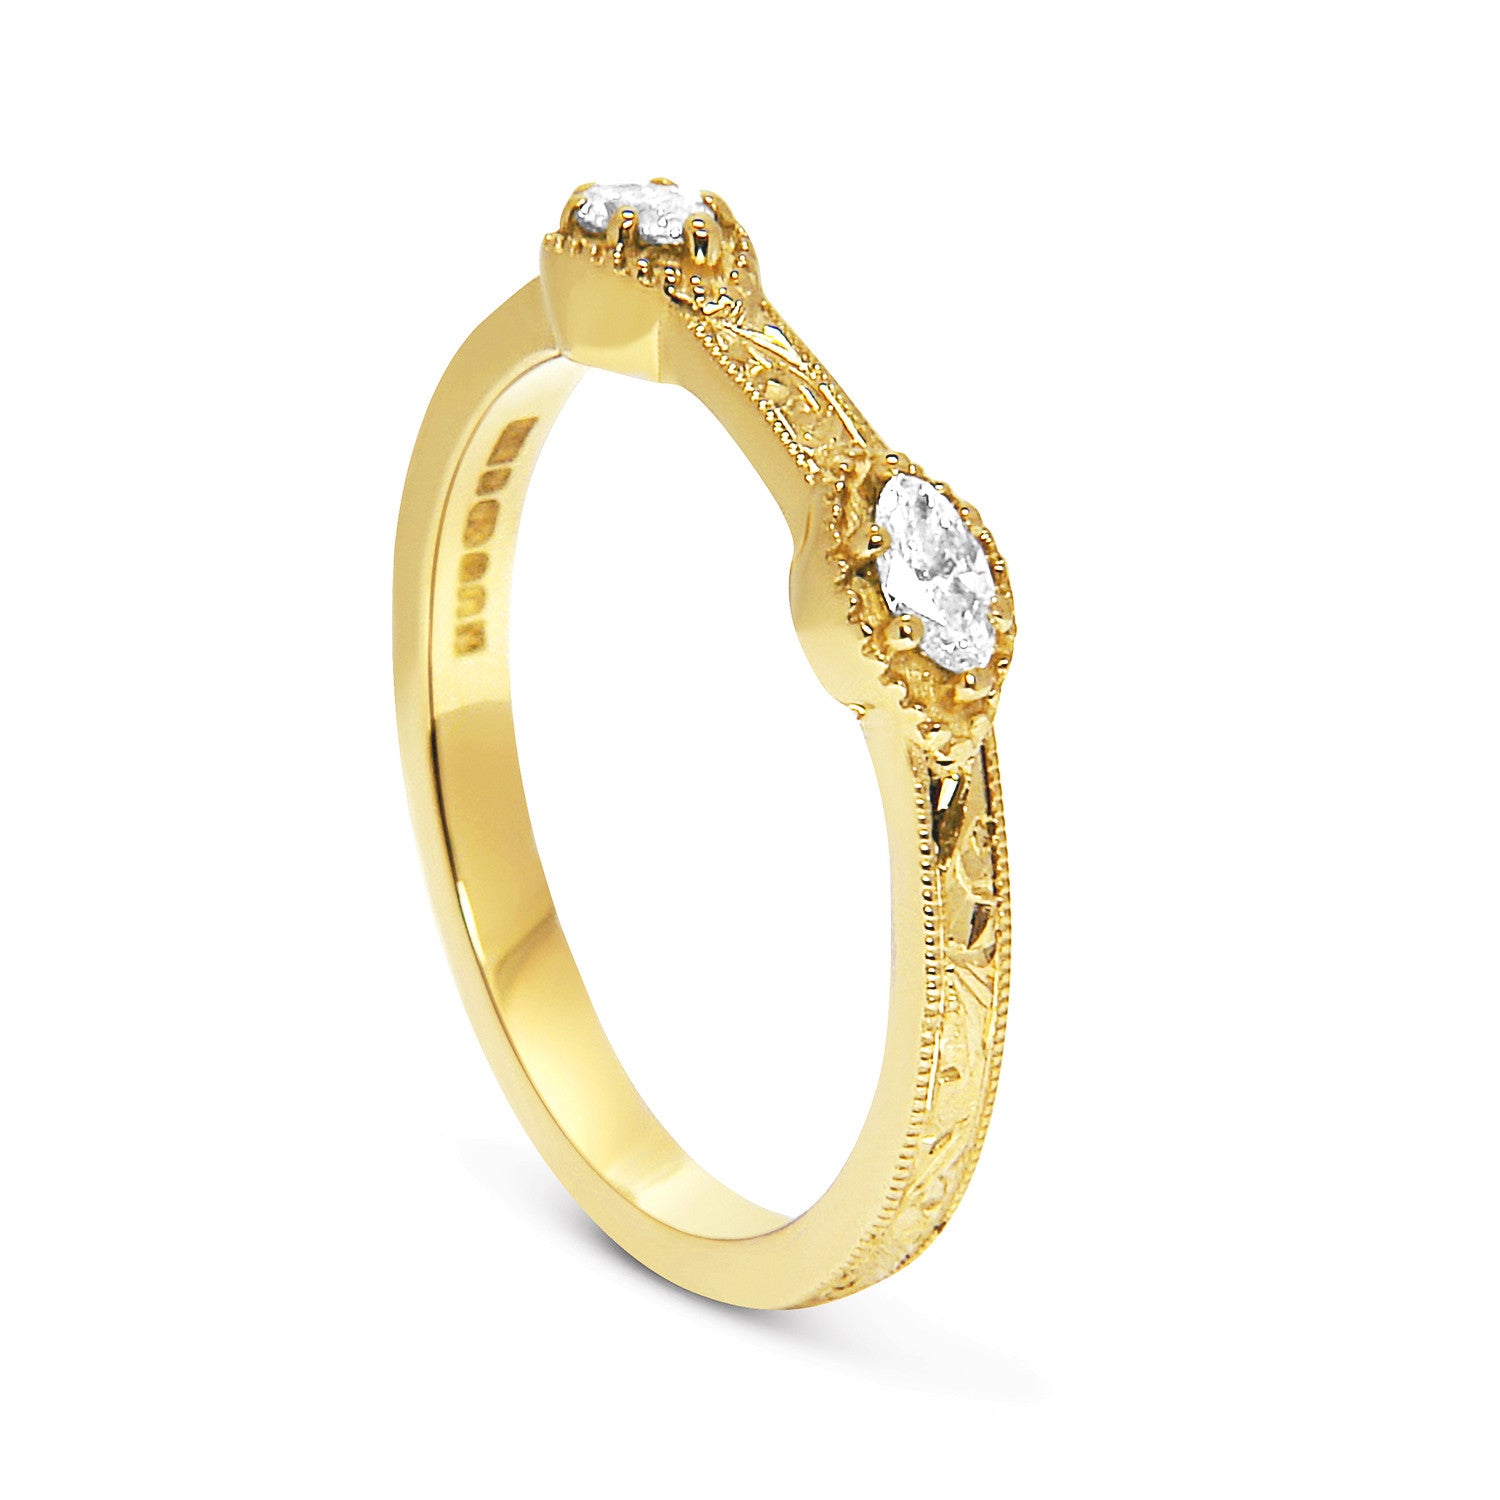 Bespoke Laura wedding ring - Fairtrade Gold, marquise diamonds, milgrain and scrolls